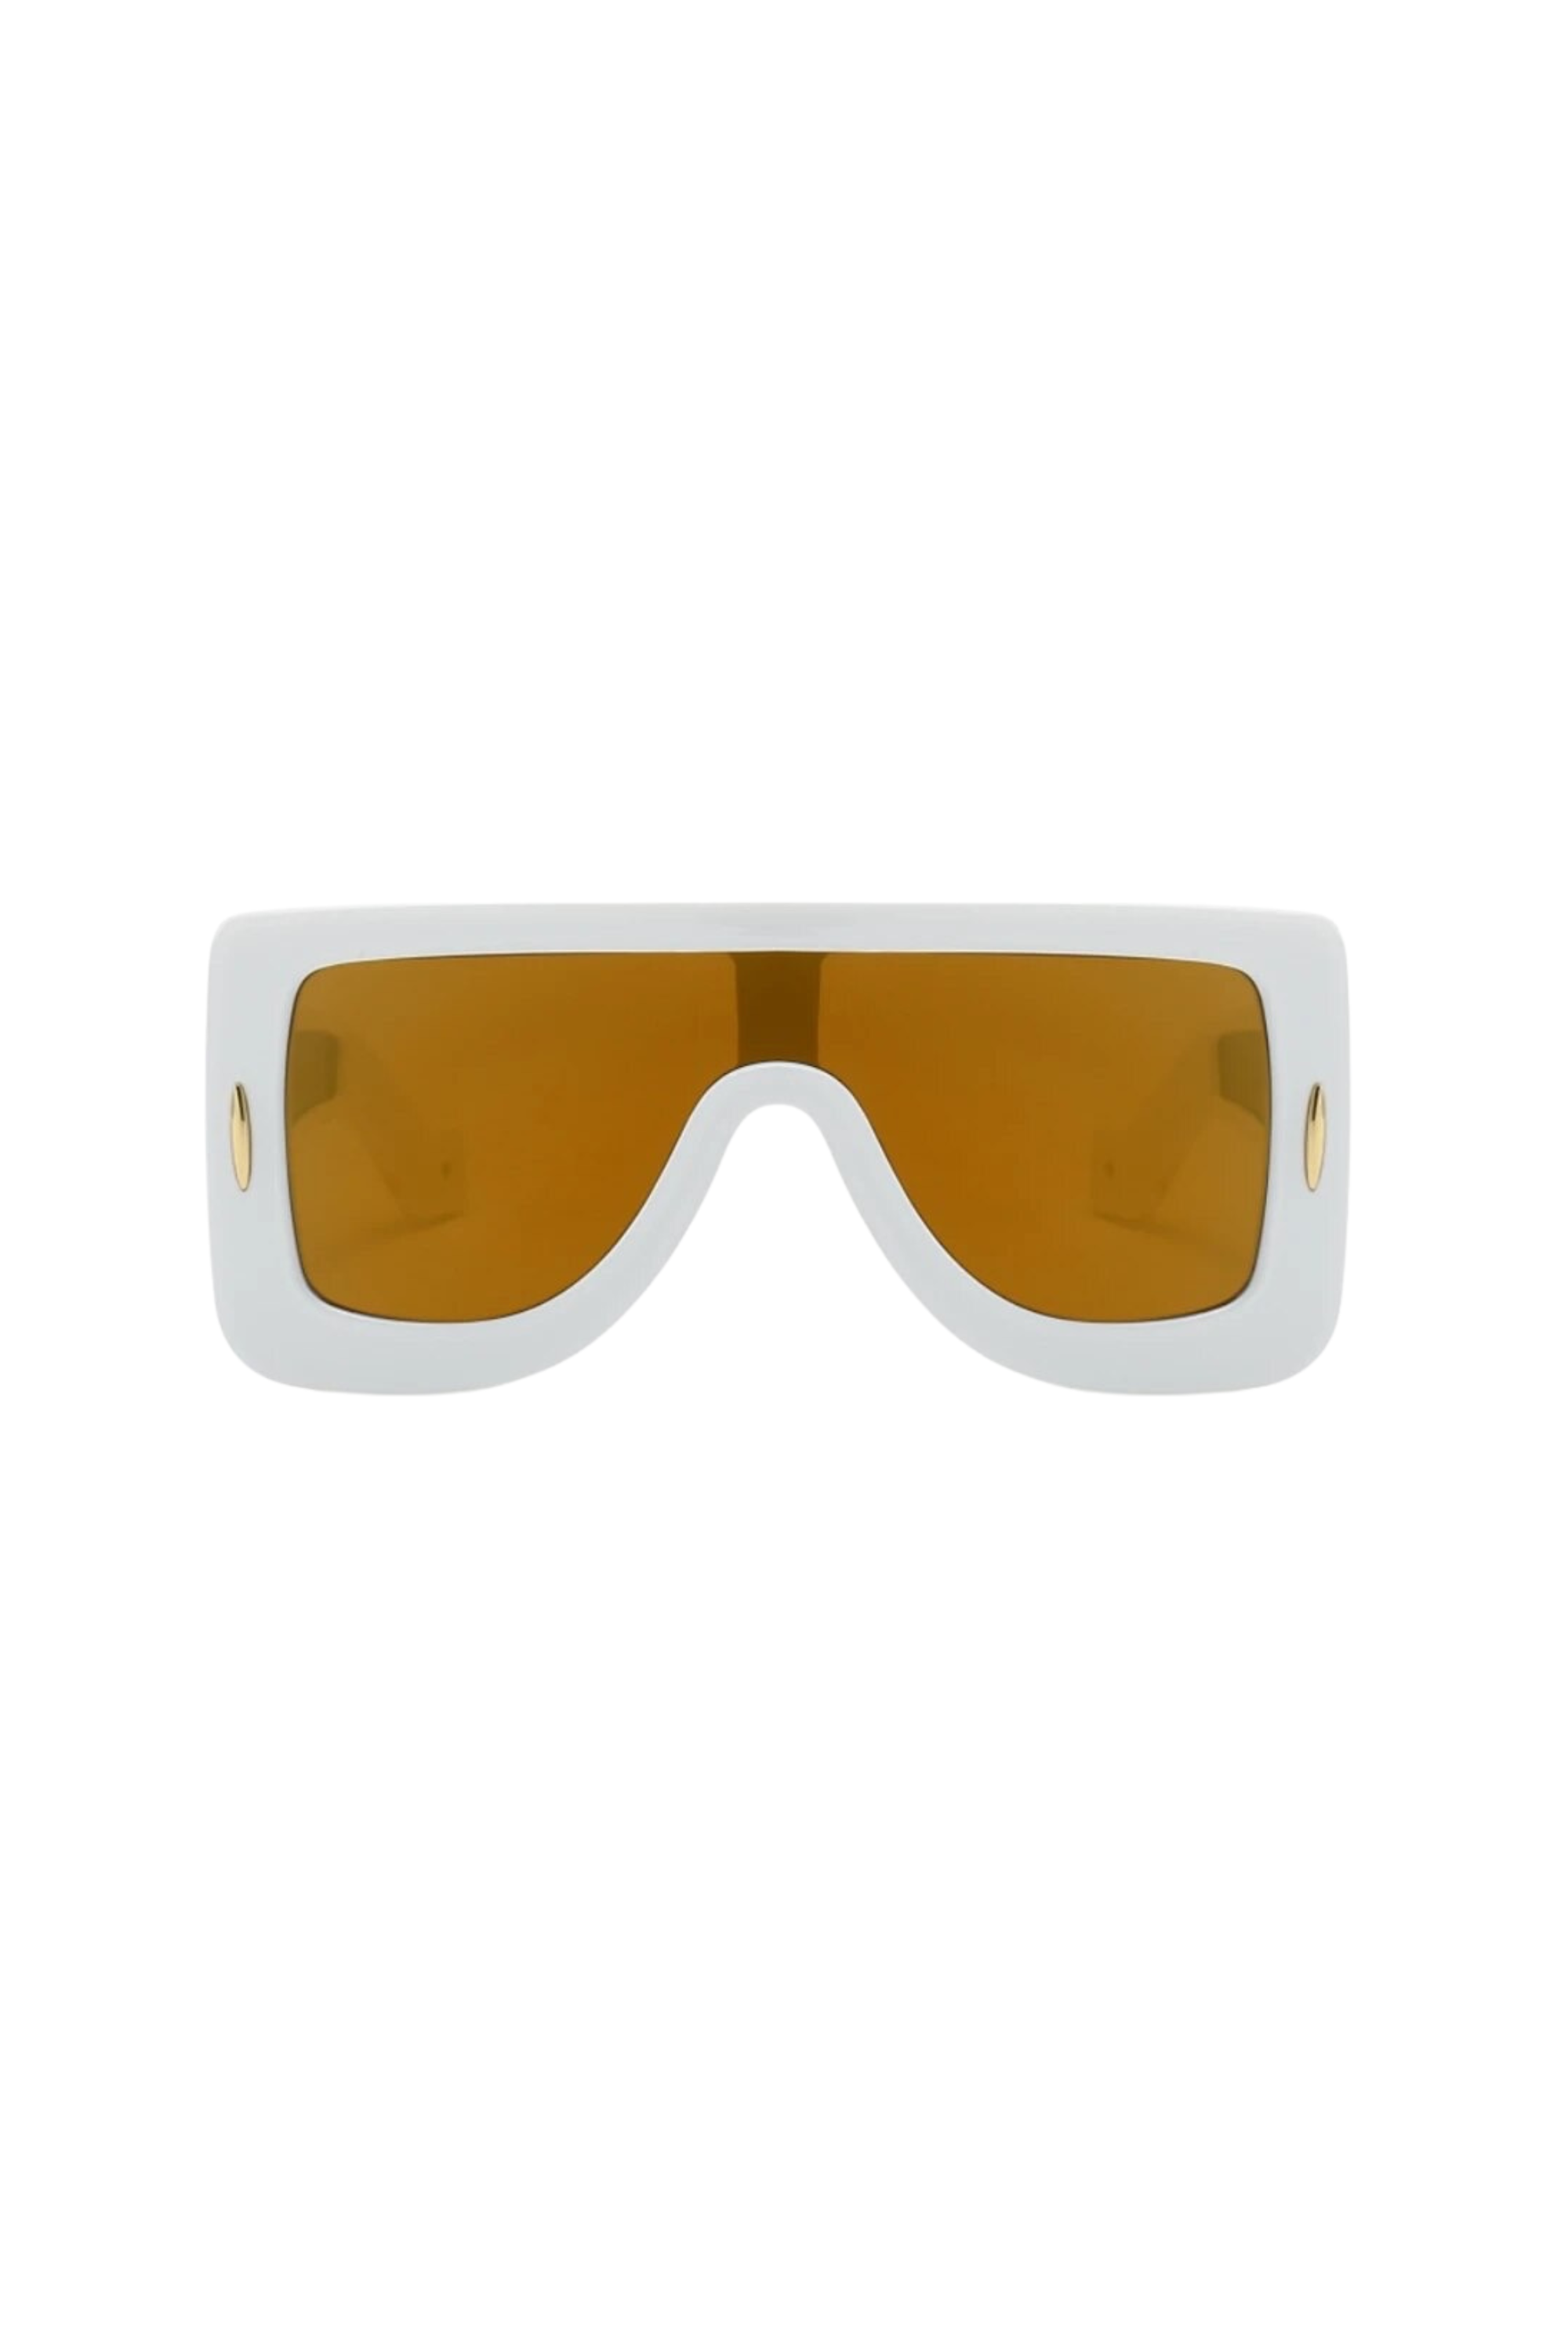 GOLDxTEAL modern white oversized square frame sunglasses.